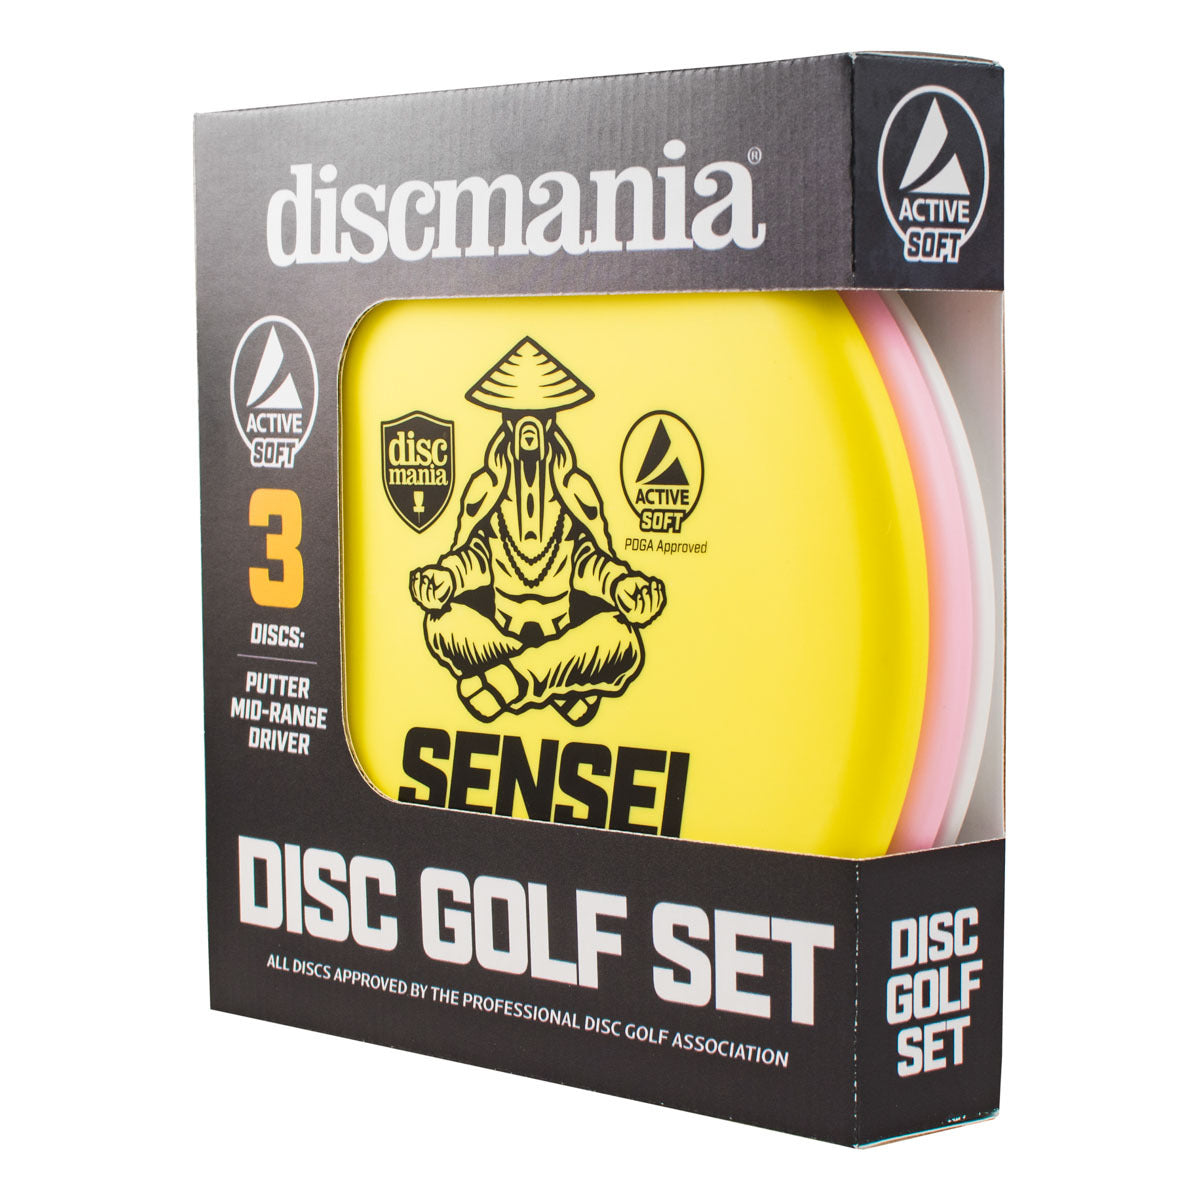 DiscMania Active Soft 3-Disc Starter Set